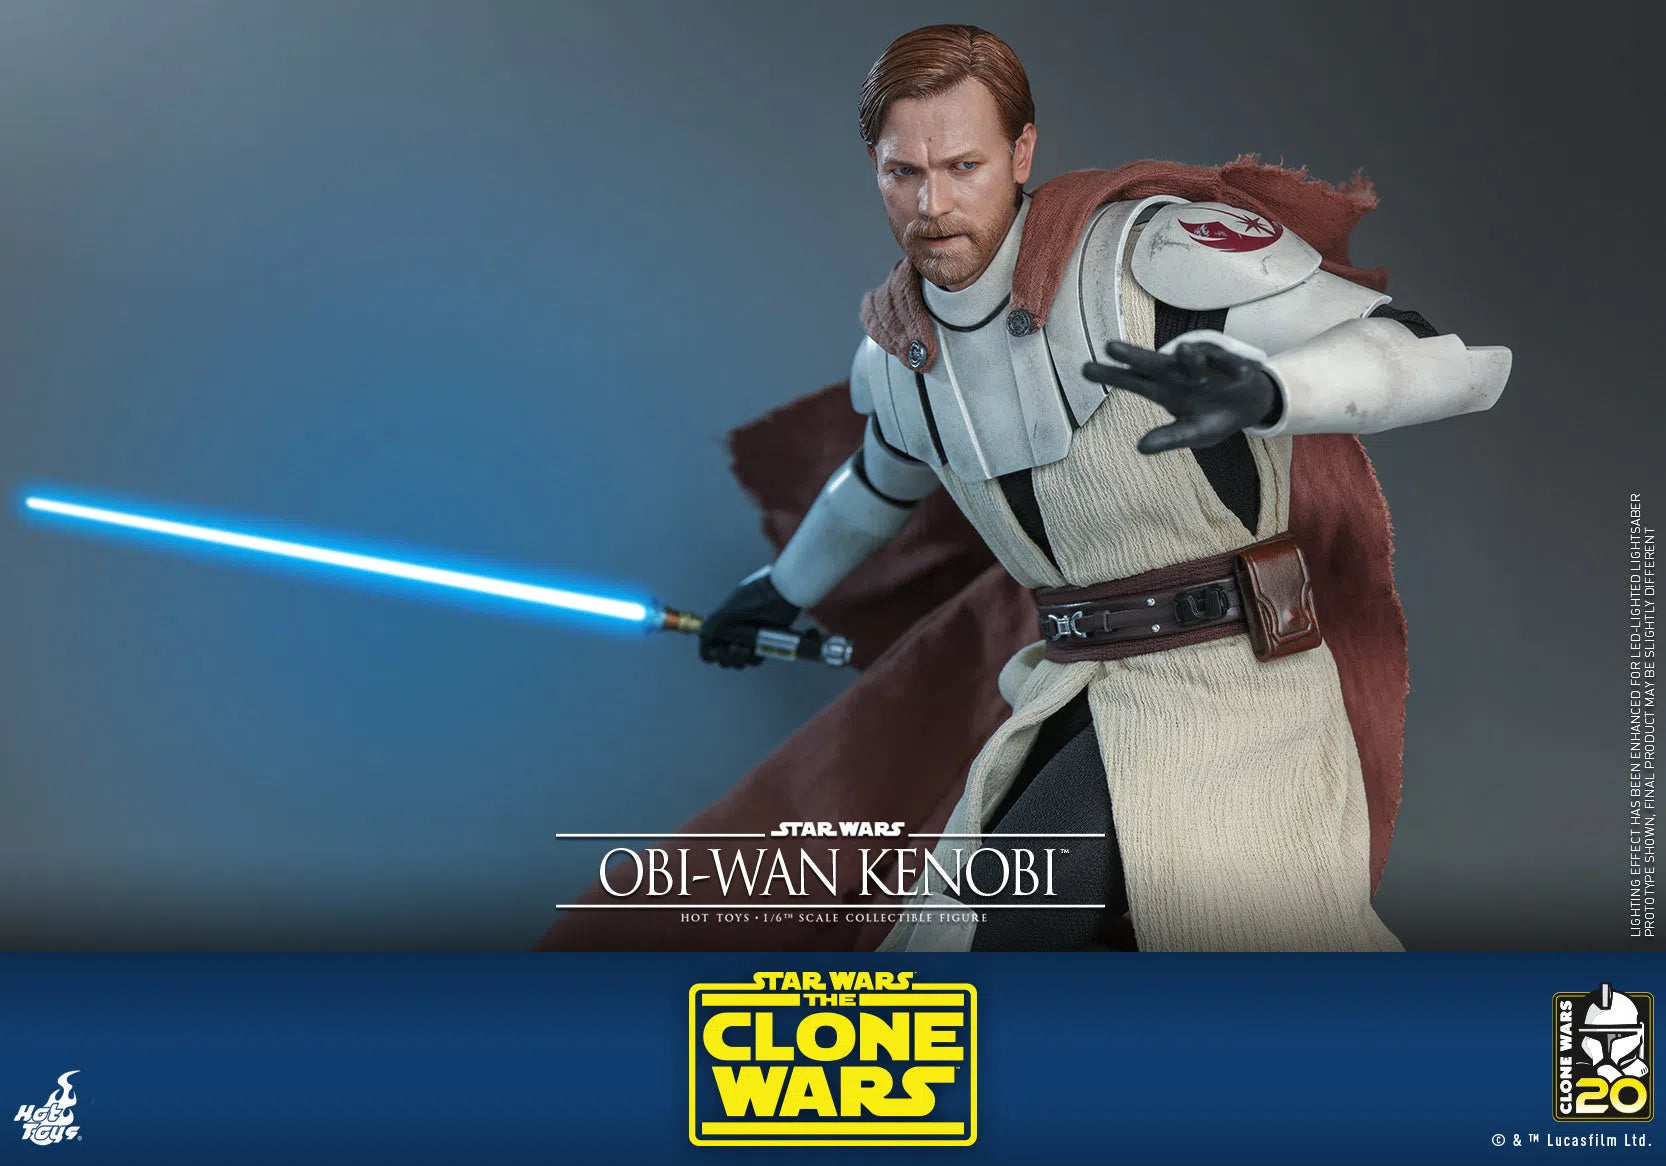 Obi-Wan Kenobi: Star Wars Episode II: Attack Of The Clones: Hot Toys